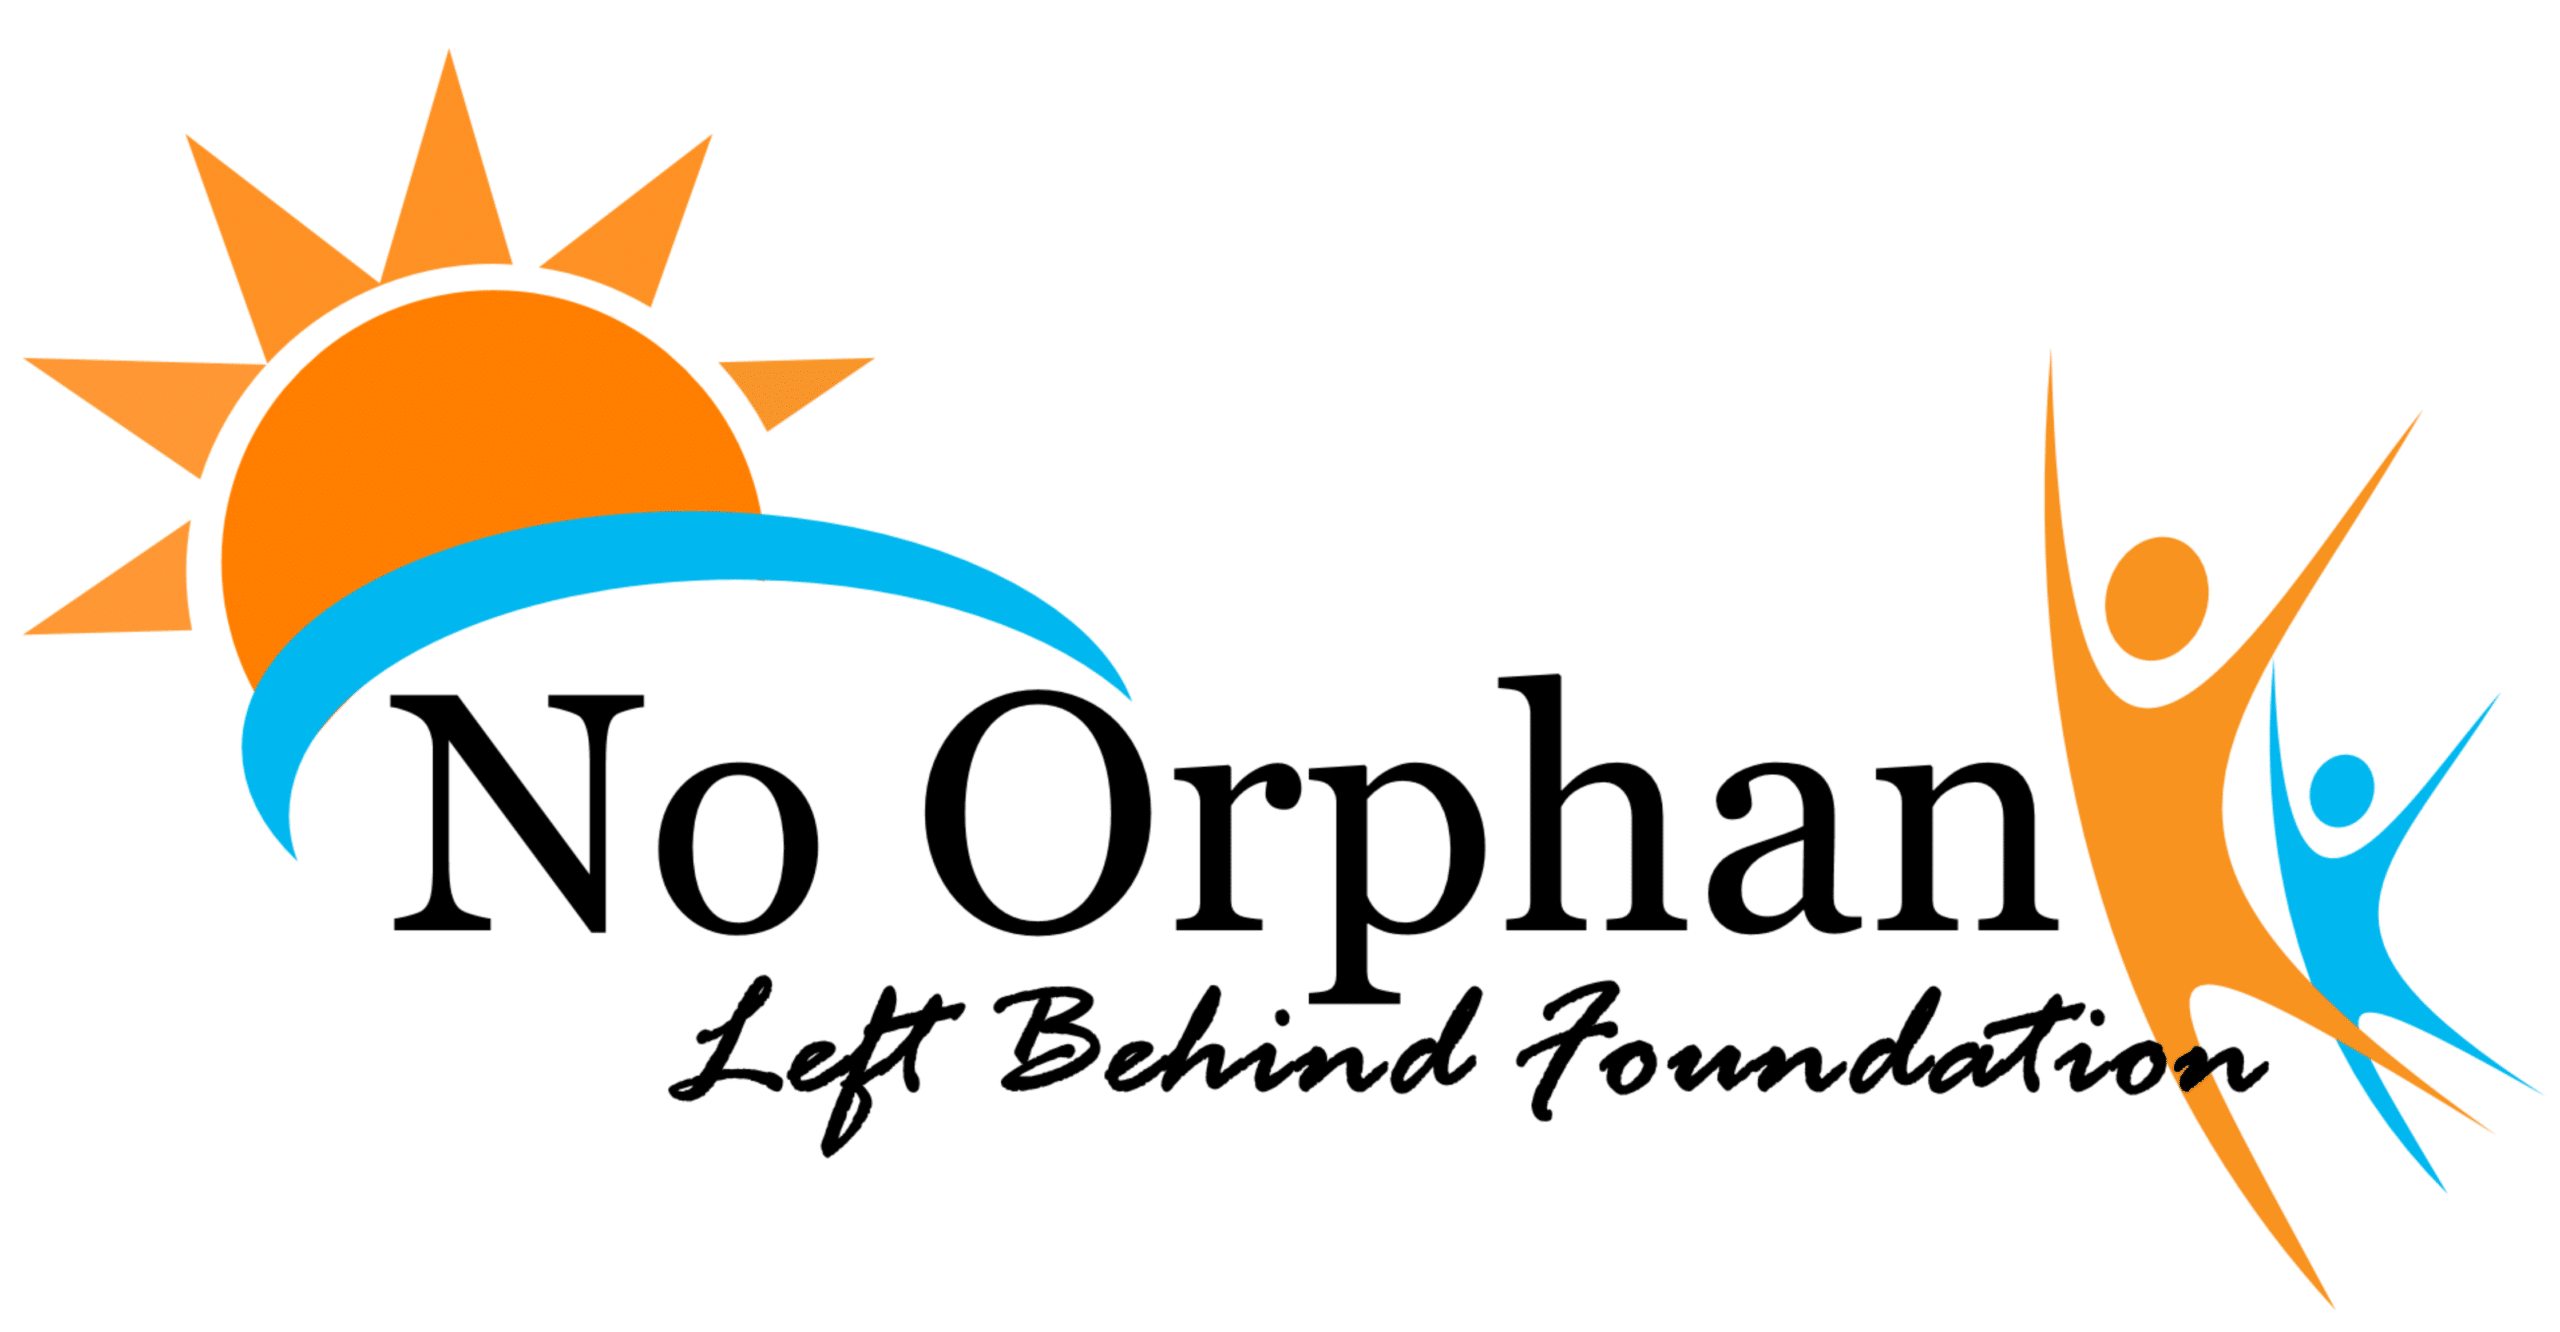 No Orphan Left Behind